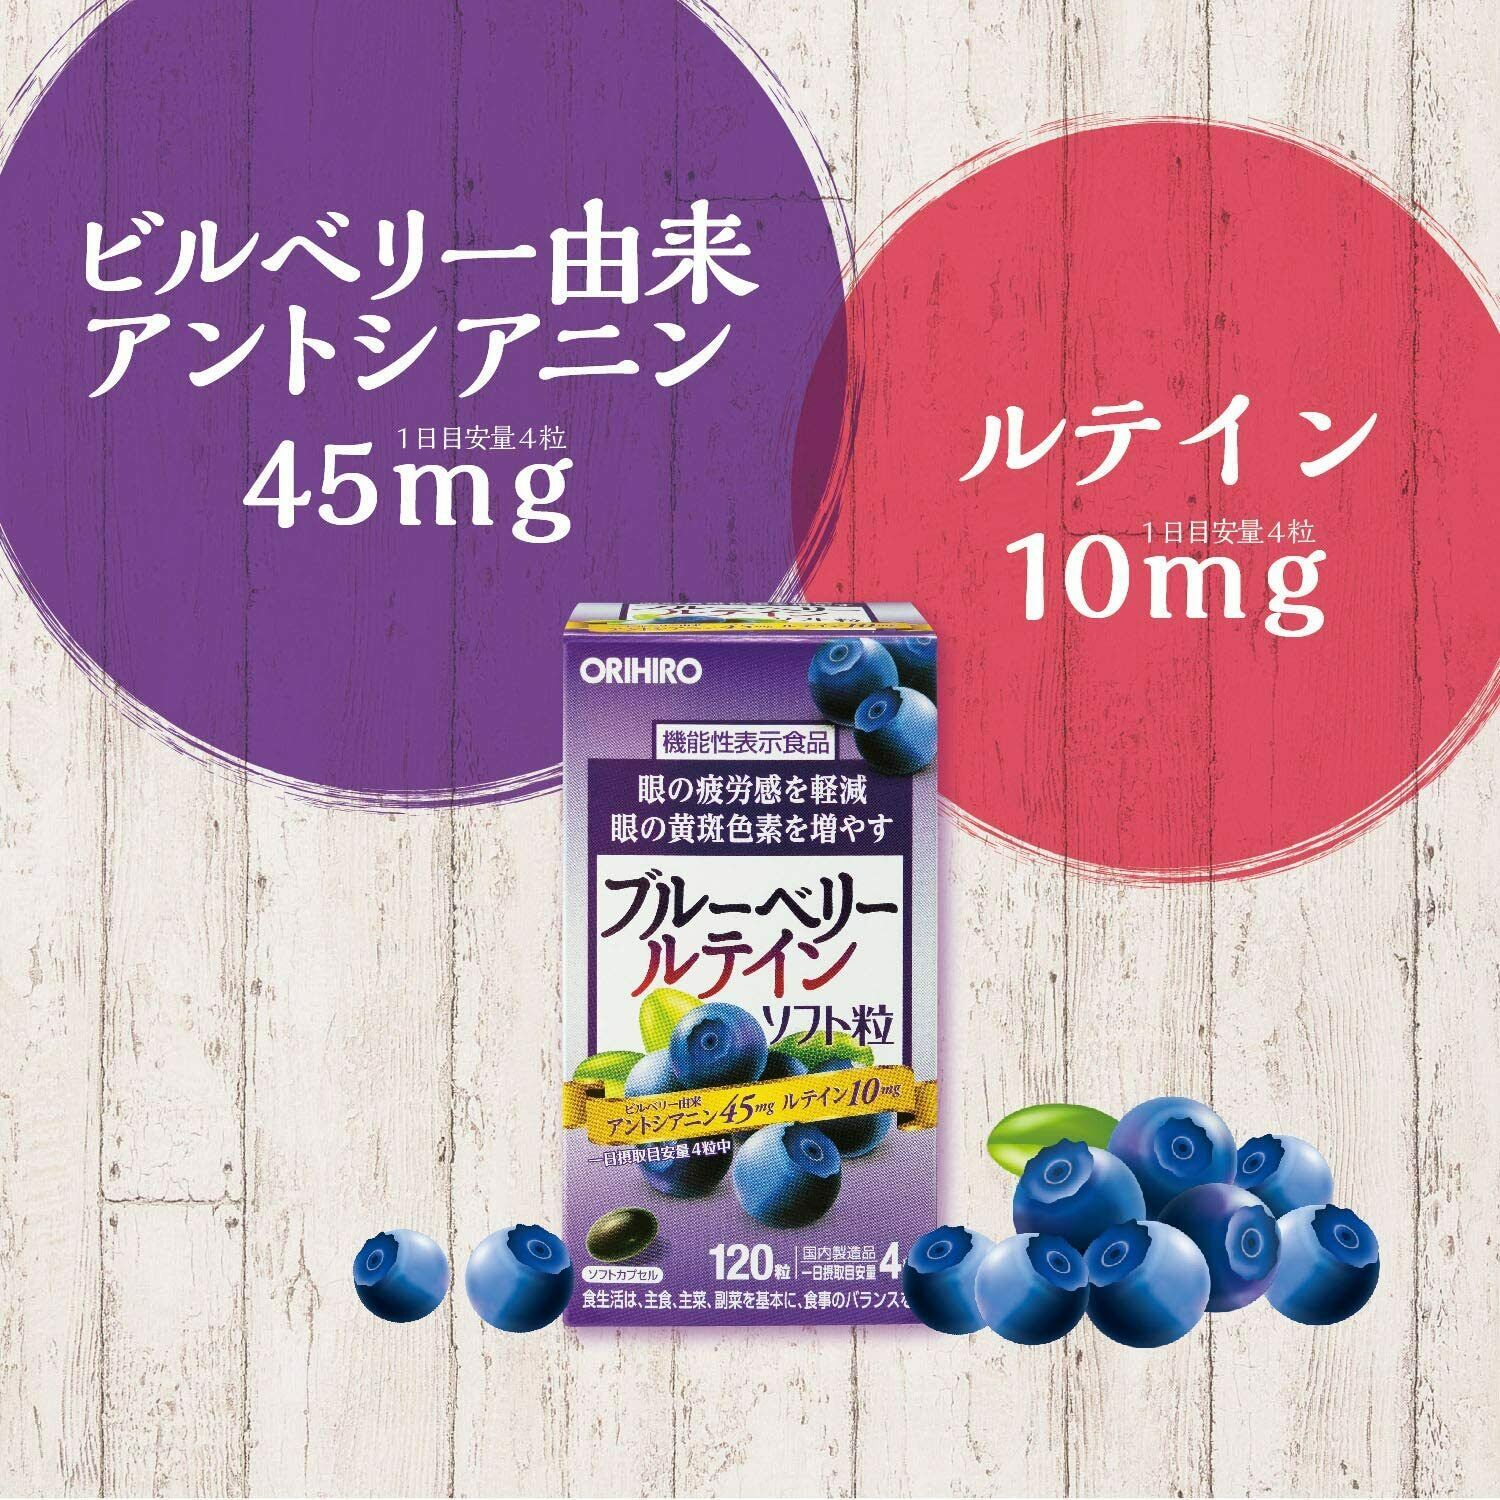 ORIHIRO Blueberry Soft Grain Lutein 120 Capsules Supplement